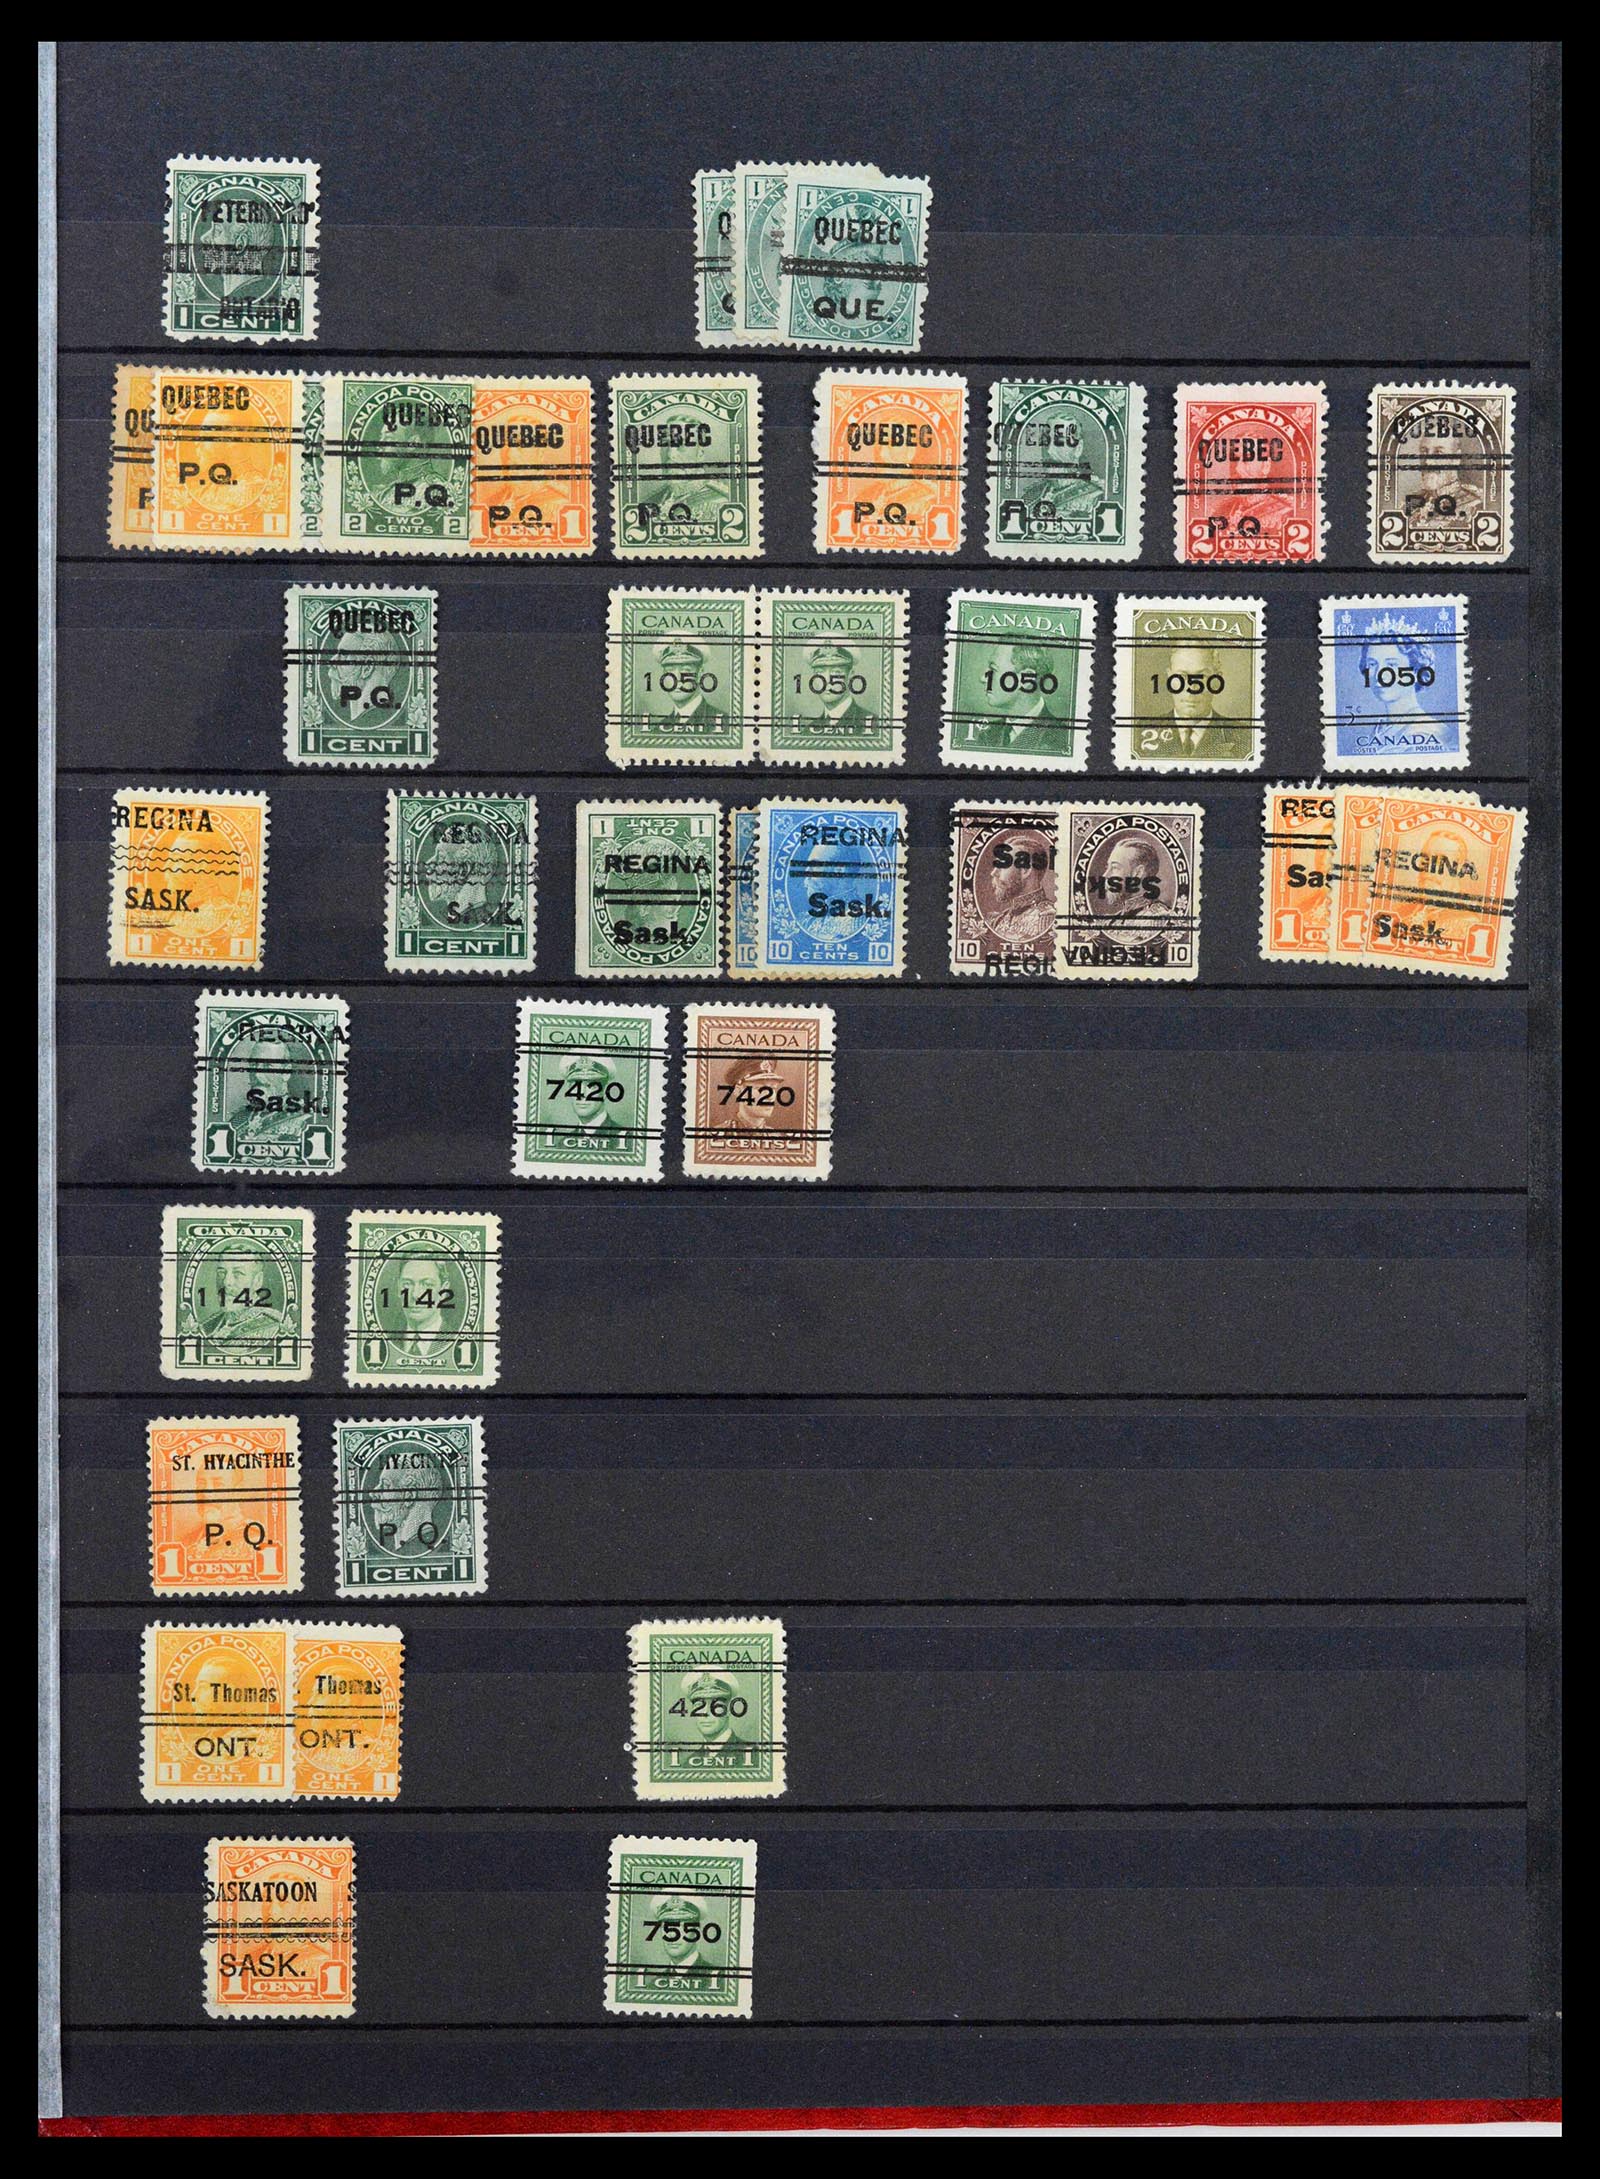 39484 0009 - Stamp collection 39484 Canada precancels 1880-1970.